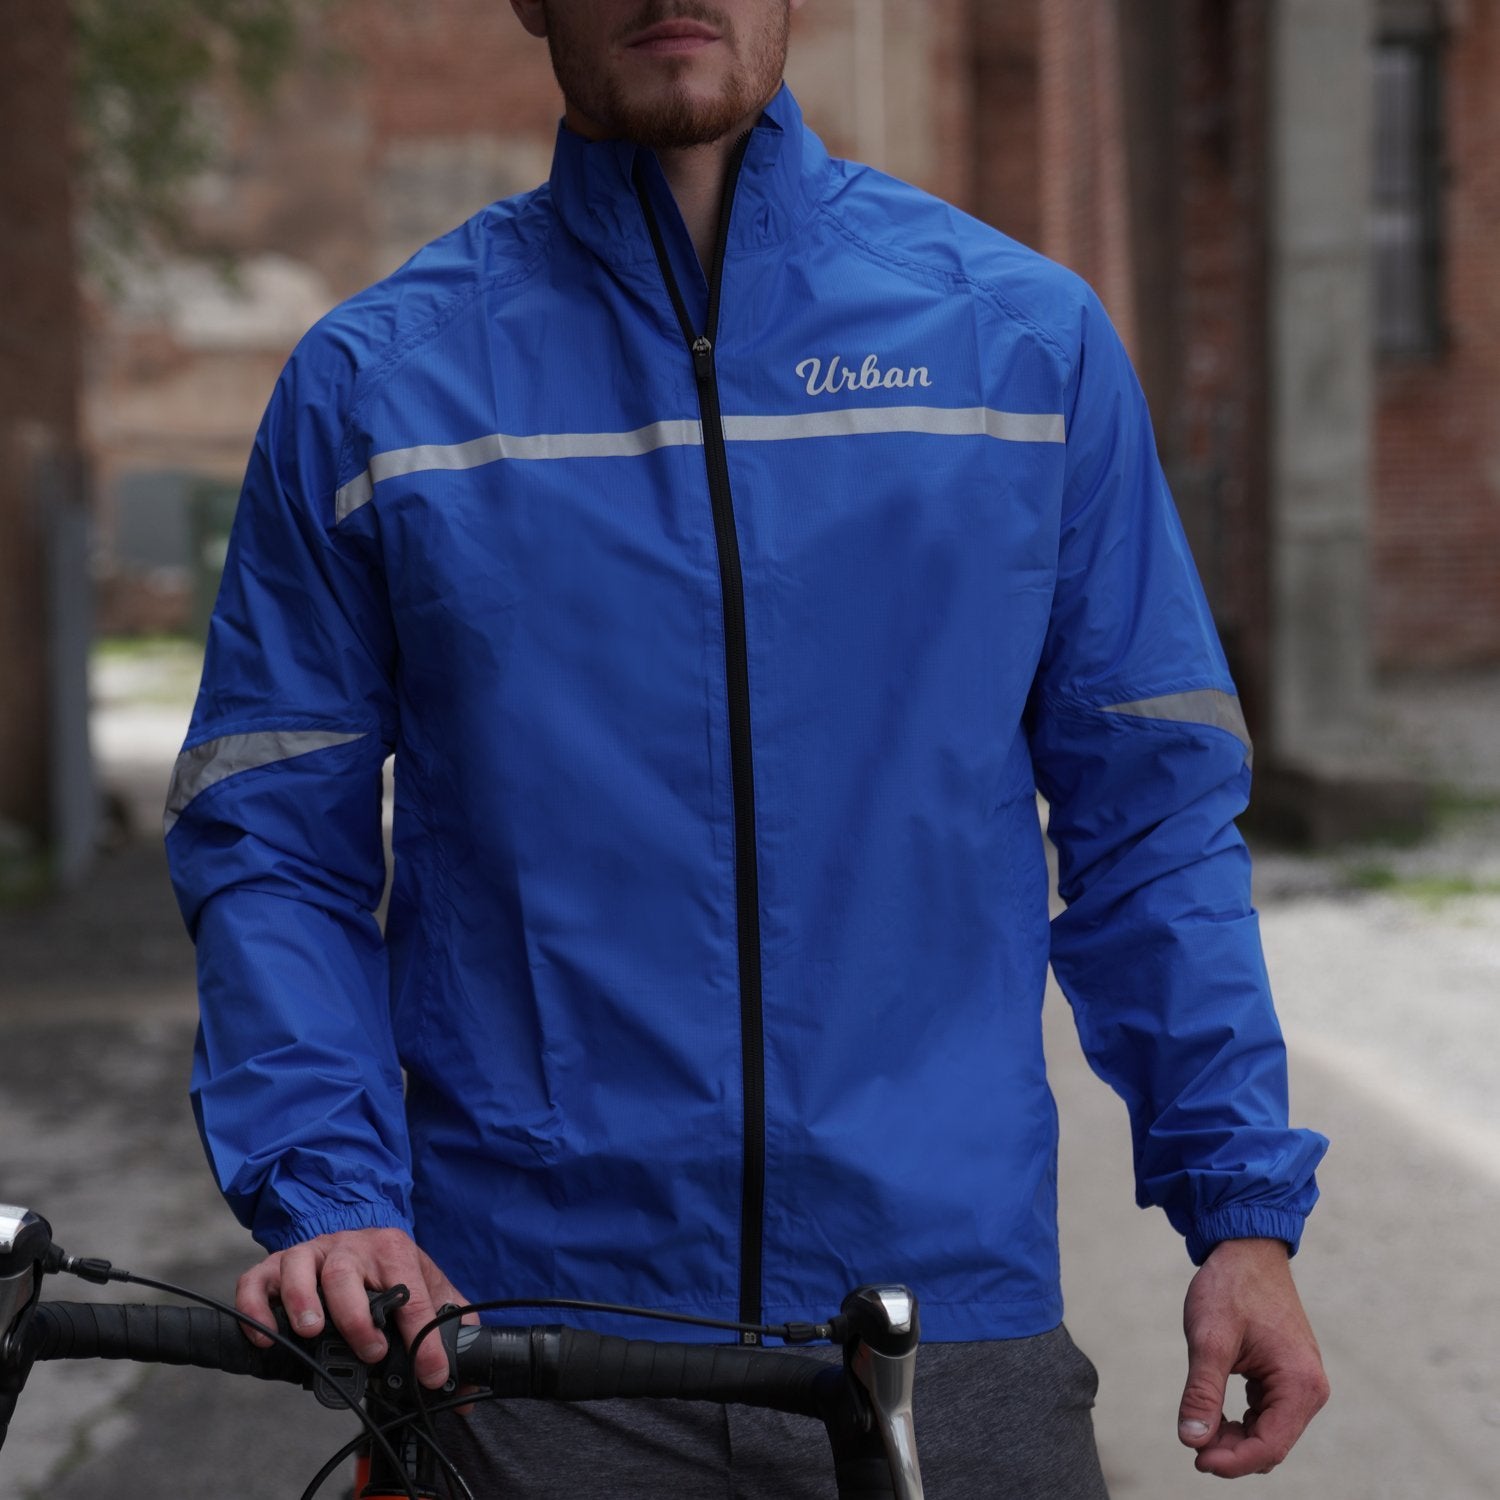 Urban Windproof & Waterproof Commuters Cycling Jacket - Yellow